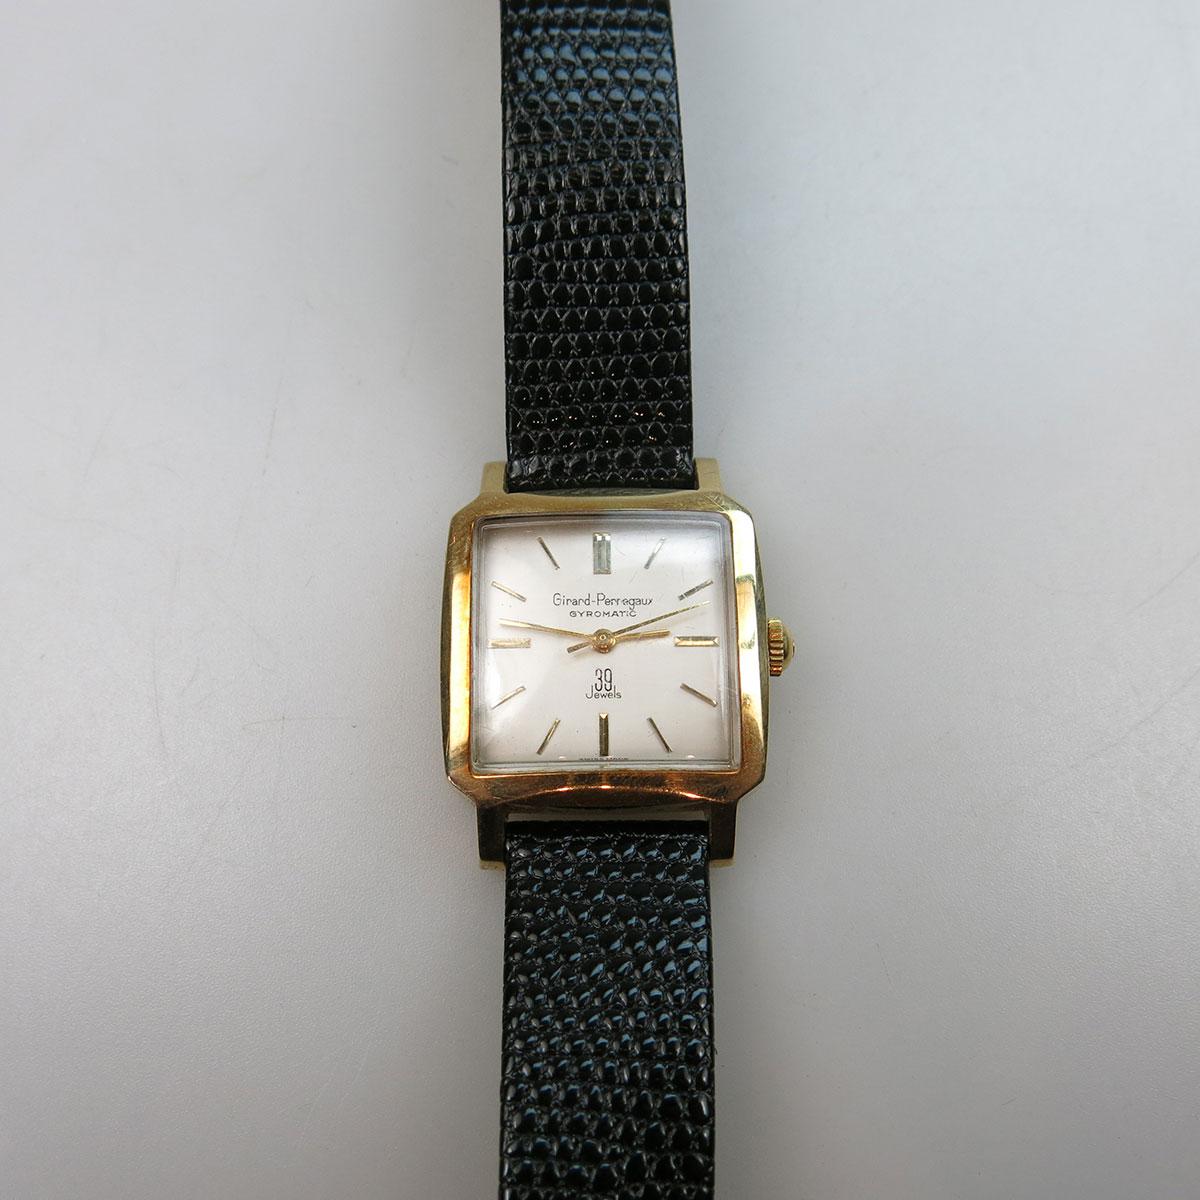 Girard-Perregaux Wristwatch